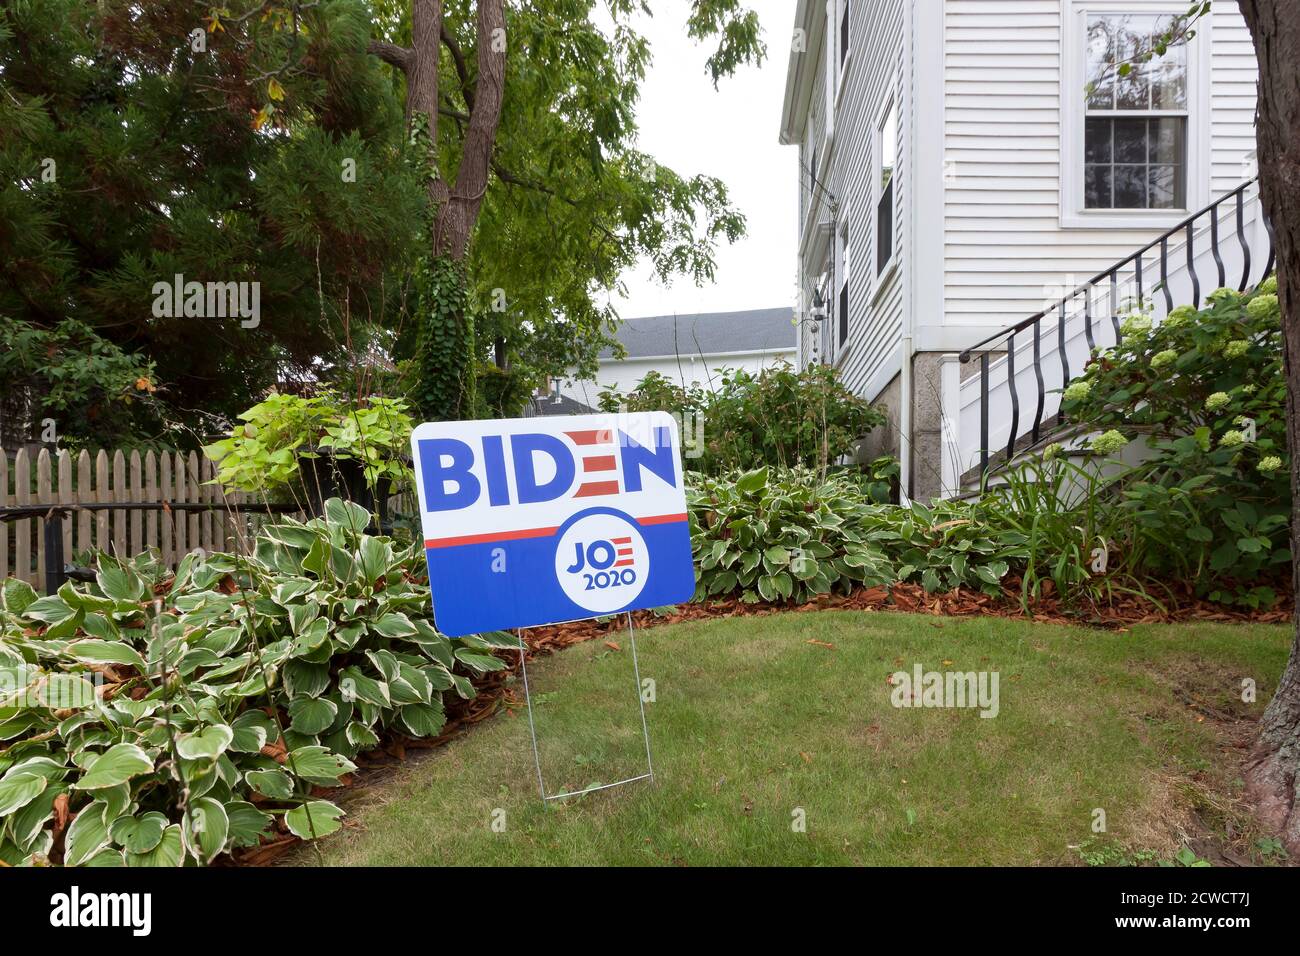 Biden Presidential Election 2020 Yard Sign in Rockport, Massachusetts. Stock Photo